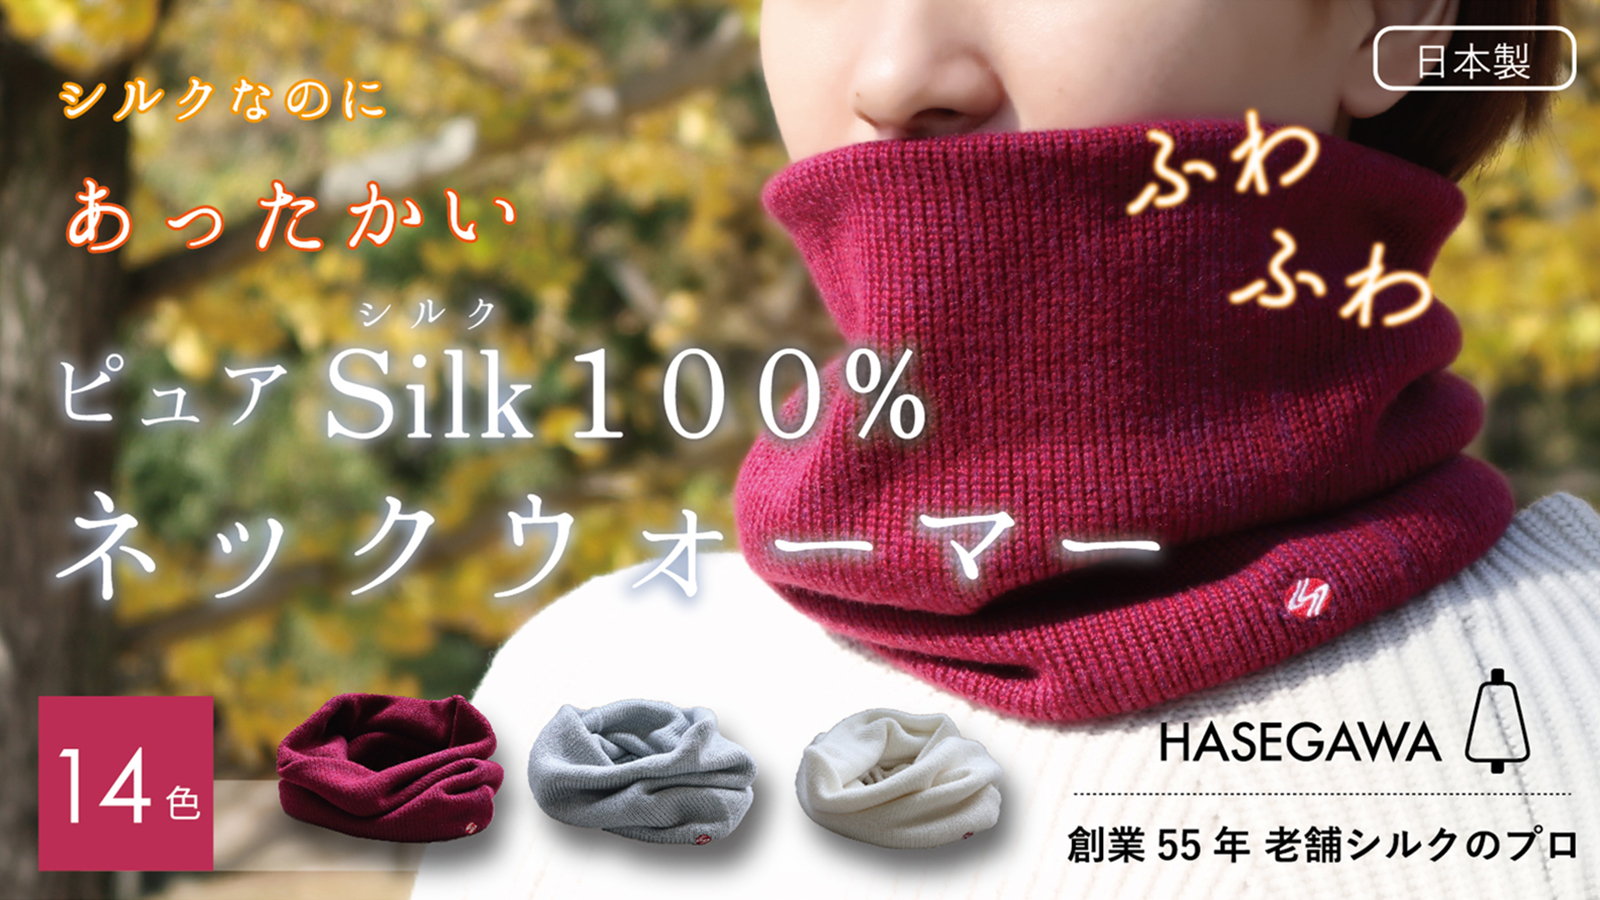 The third crowdfunding “Fluffy silk warmer super warm”